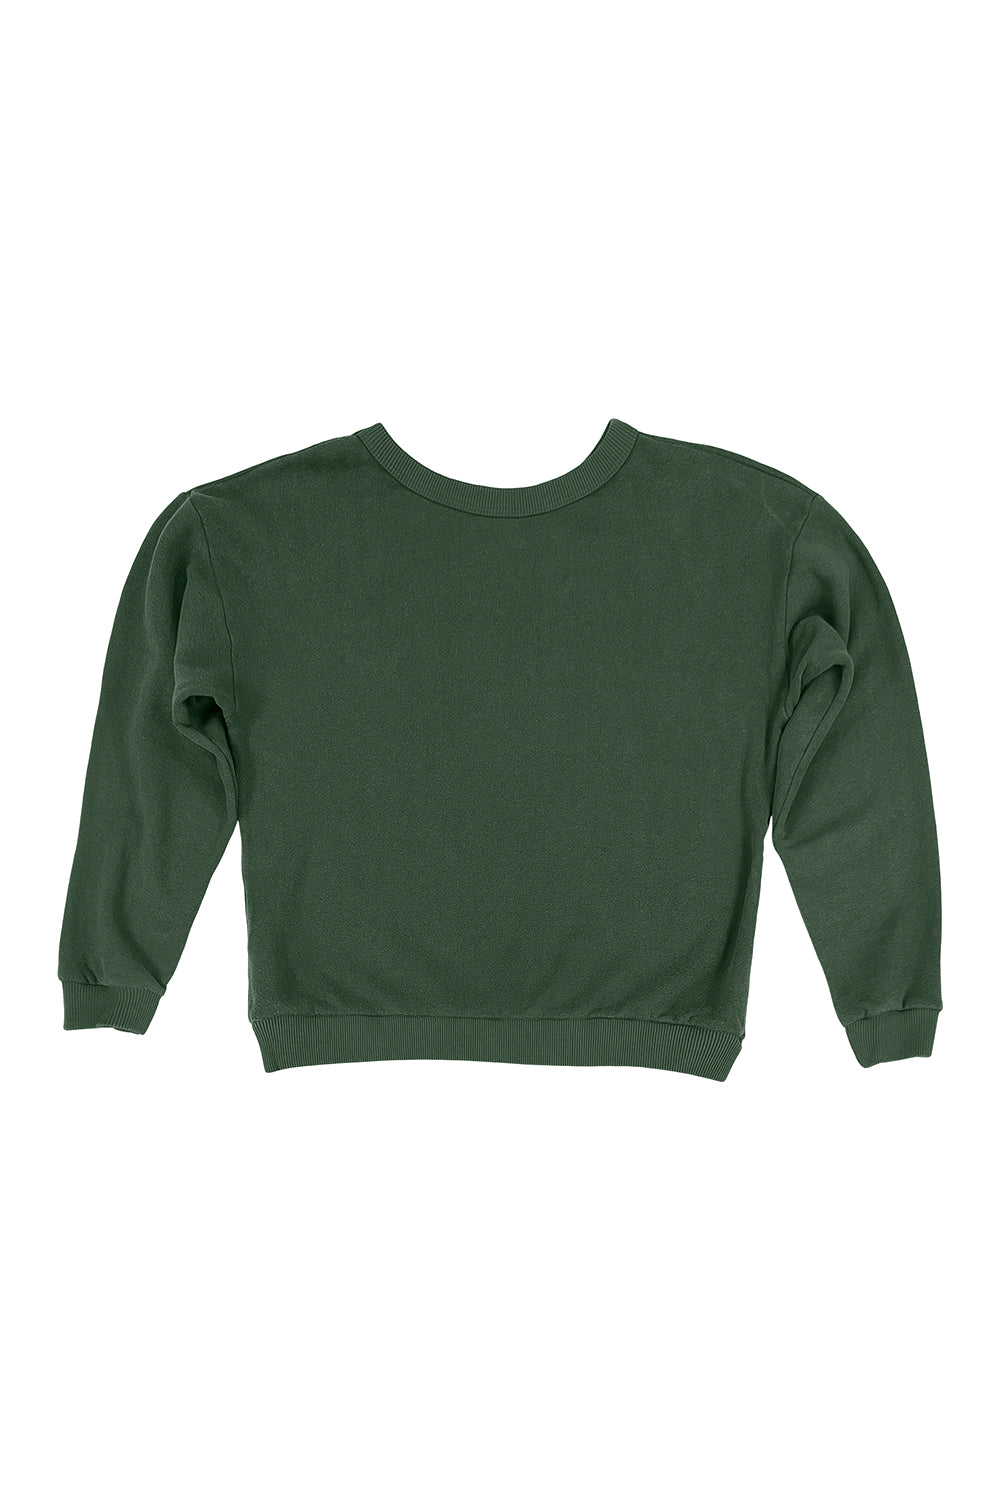 Accessories Crux Cropped Sweatshirt Jungmaven & | Clothing Hemp